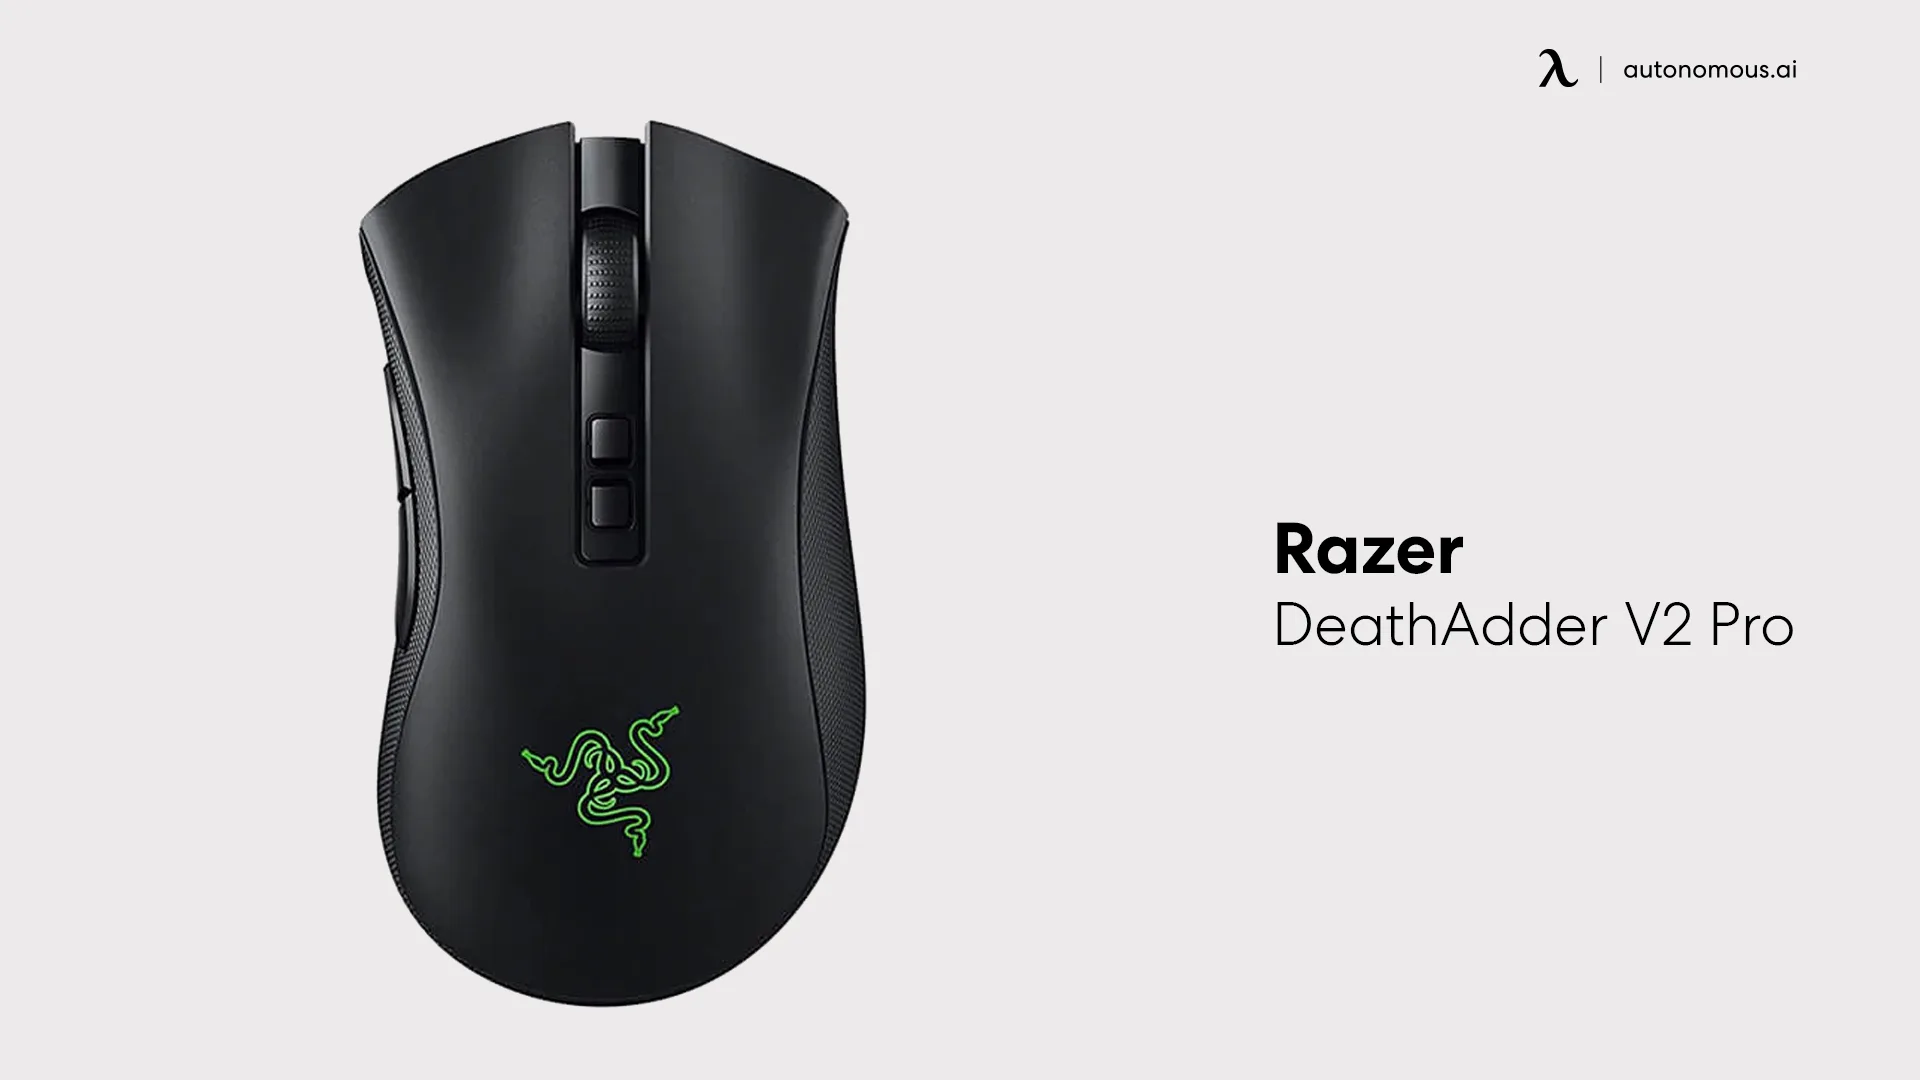 Razer DeathAdder V2 Pro wireless gaming mouse